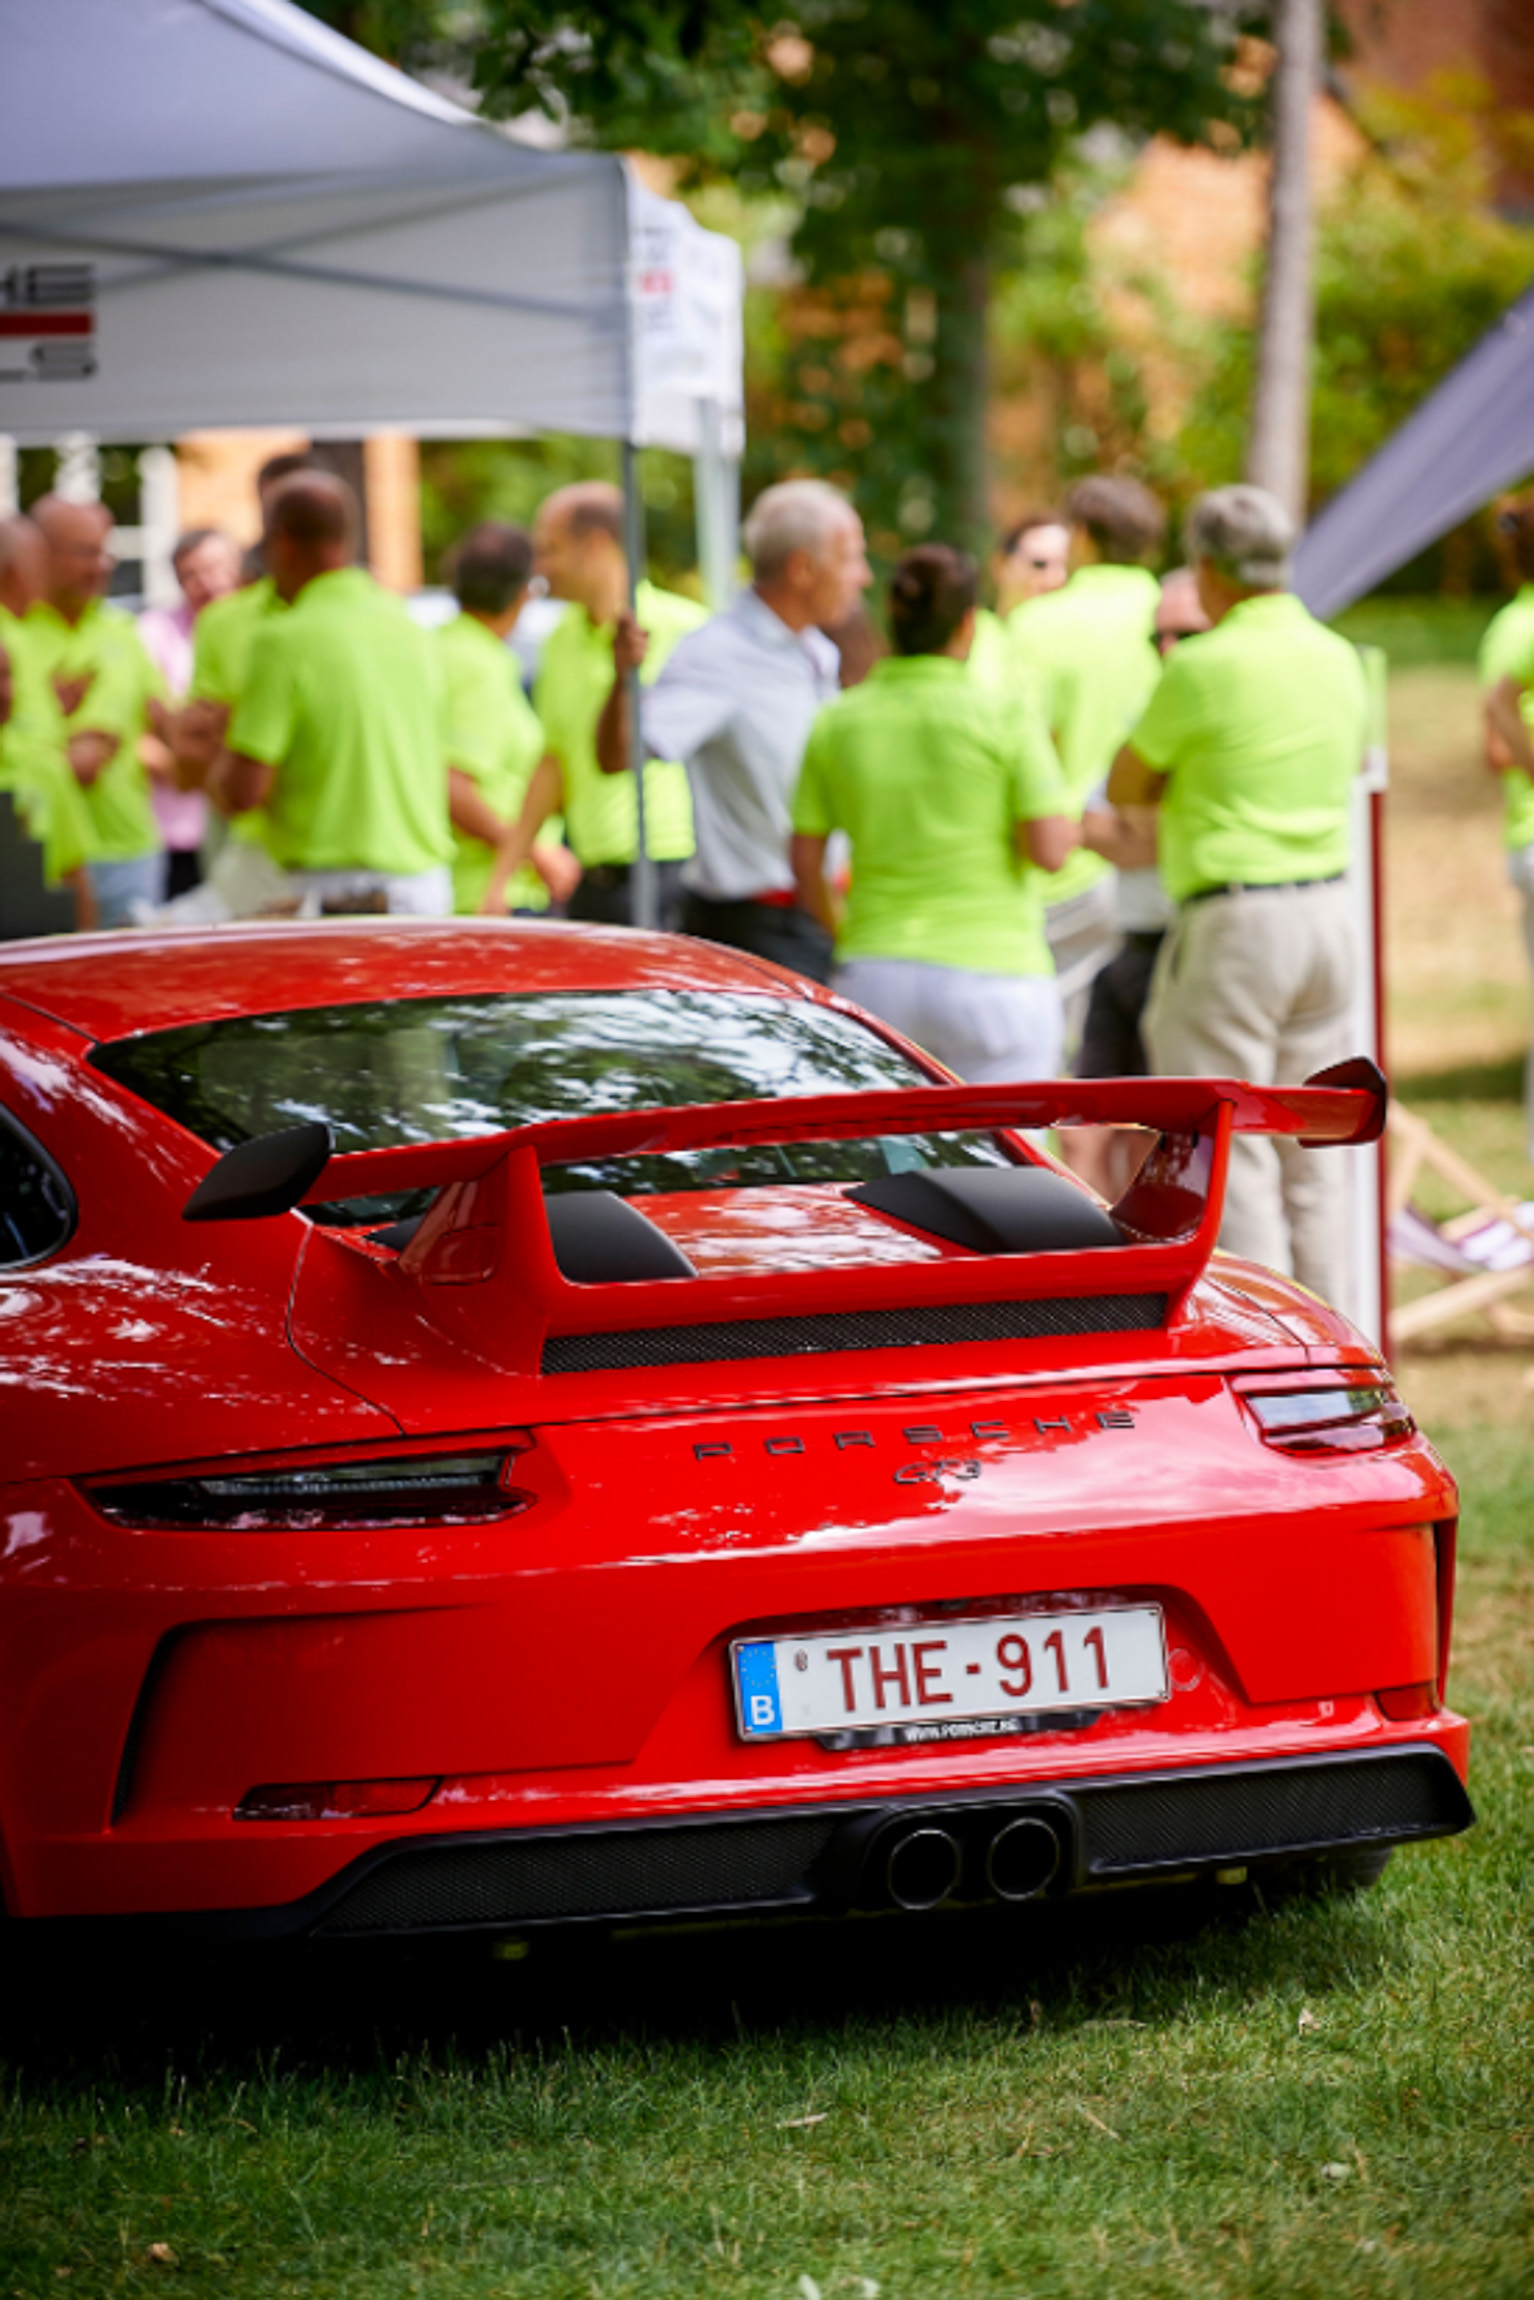 Belgium Sothebys Int. Realty Golfing with Porsche NL